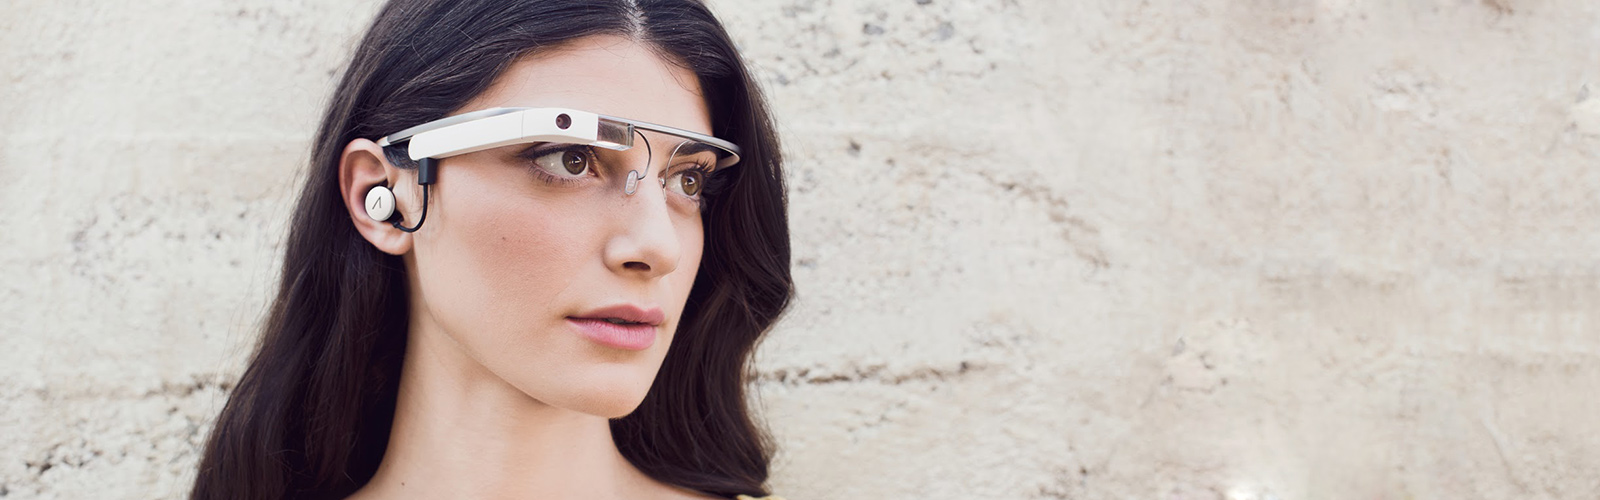 Ar-очки Google Glass 2014